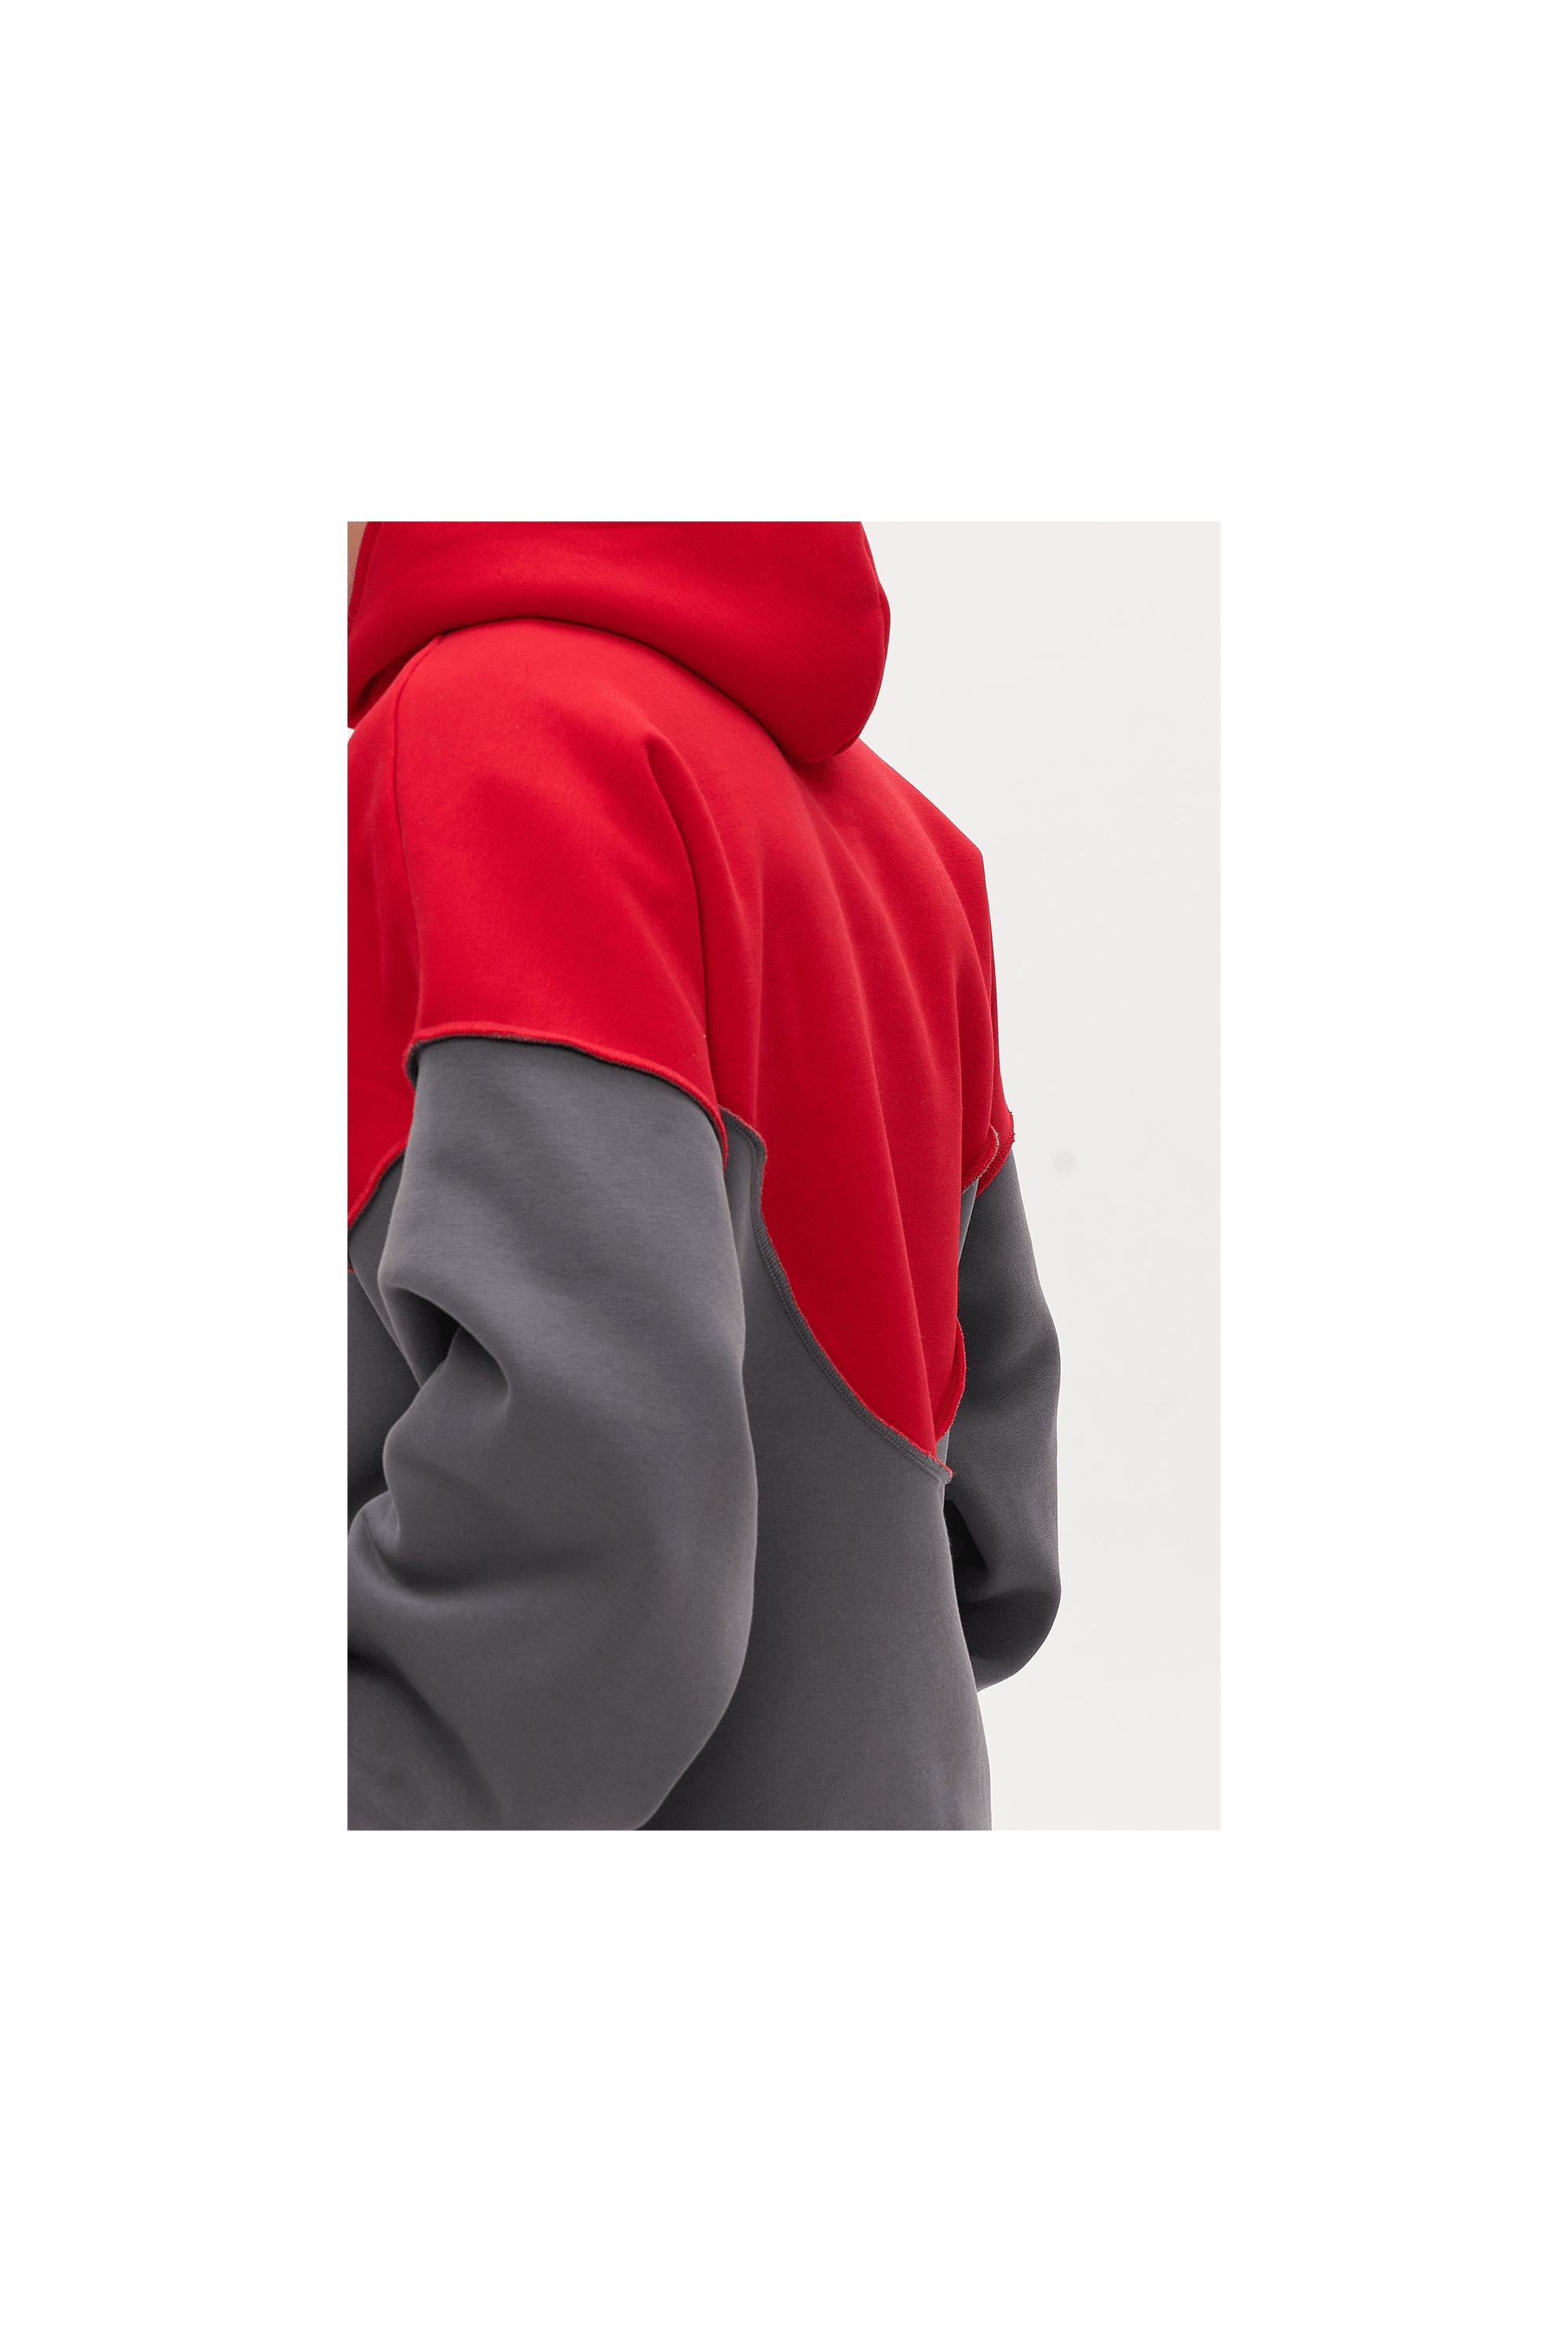 BE Grey Red hoodie - yesUndress